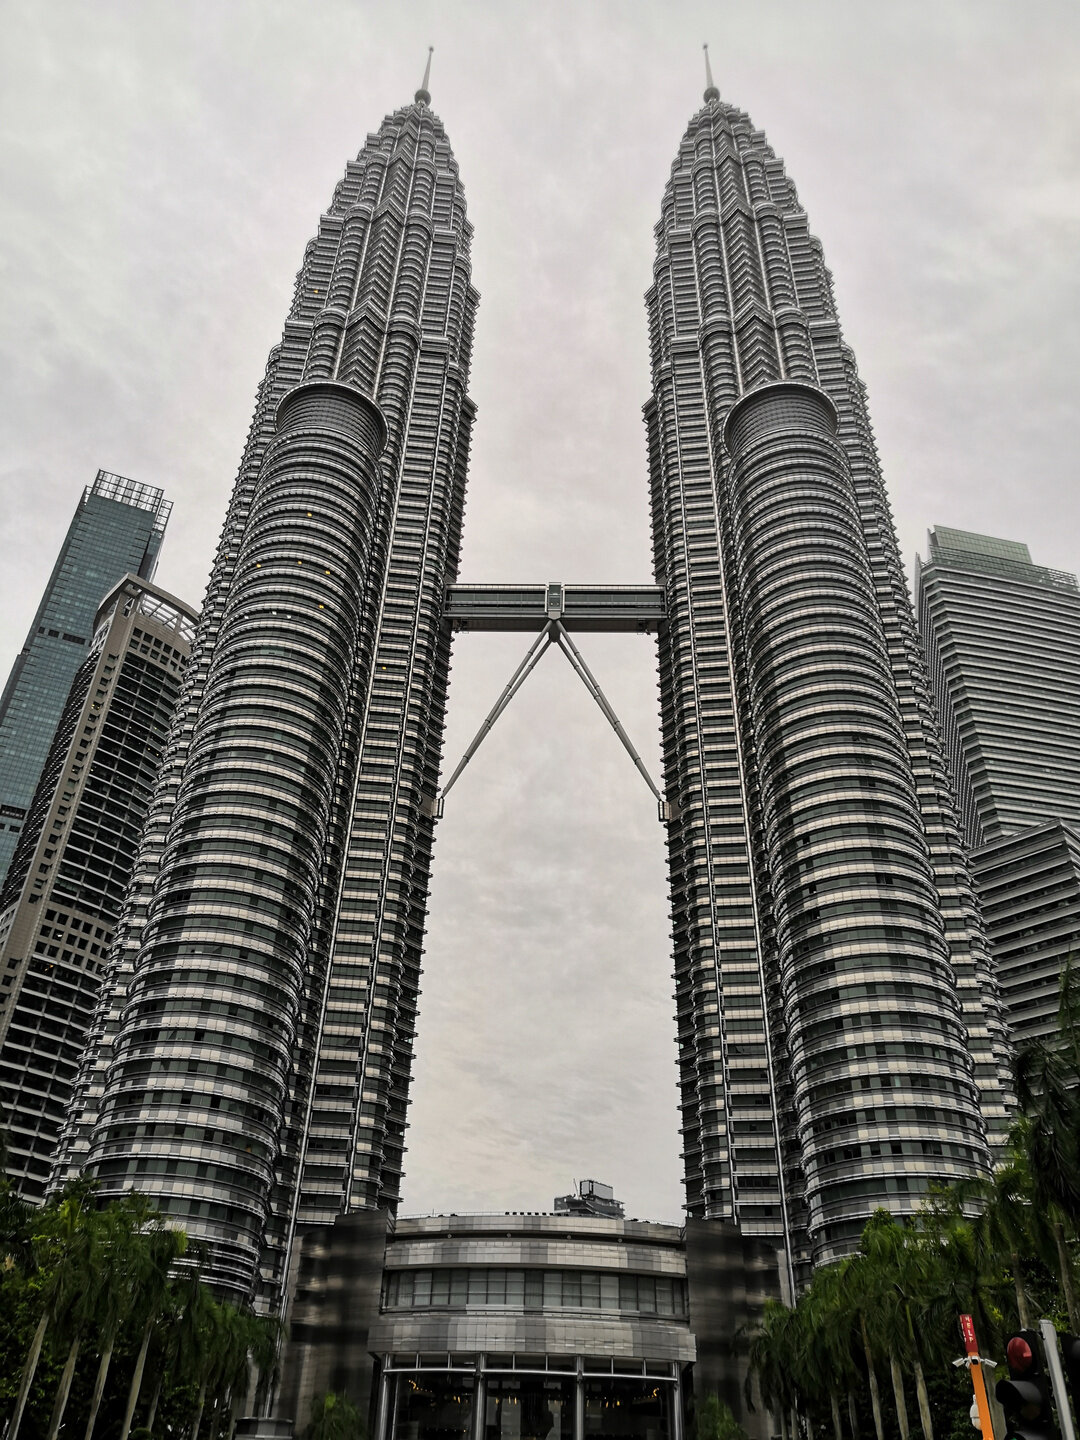 <span lang="ru">Башни Petronas, вид днем</span><span lang="en">Petronas Towers, daytime view</span>